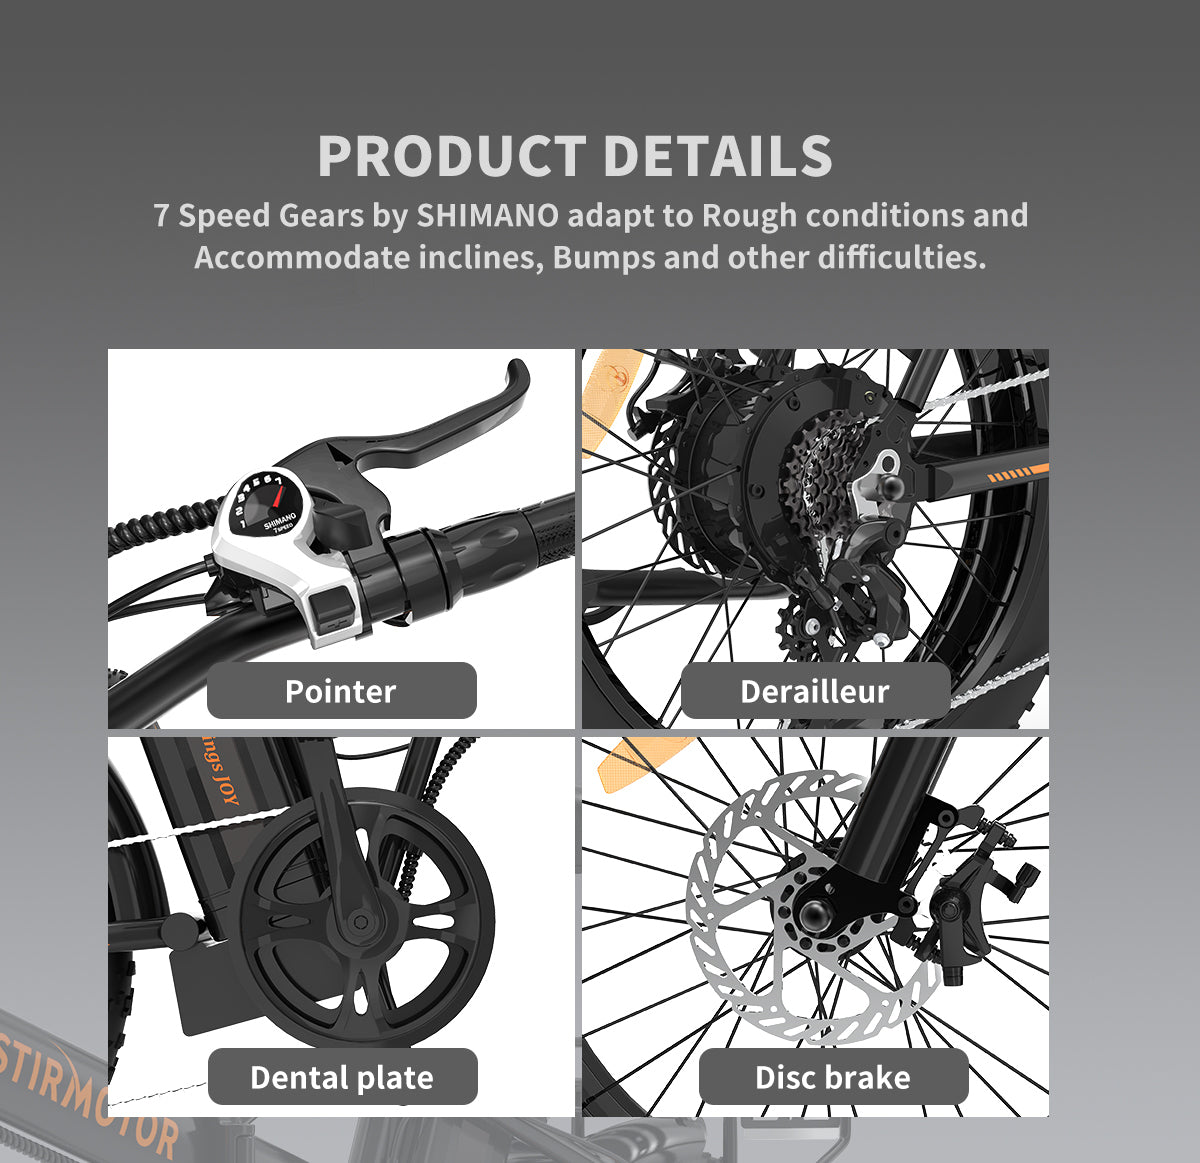 GTRACING x AOSTIMOTOR Fat Tire Folding Electric Bike A20 - GTRACING